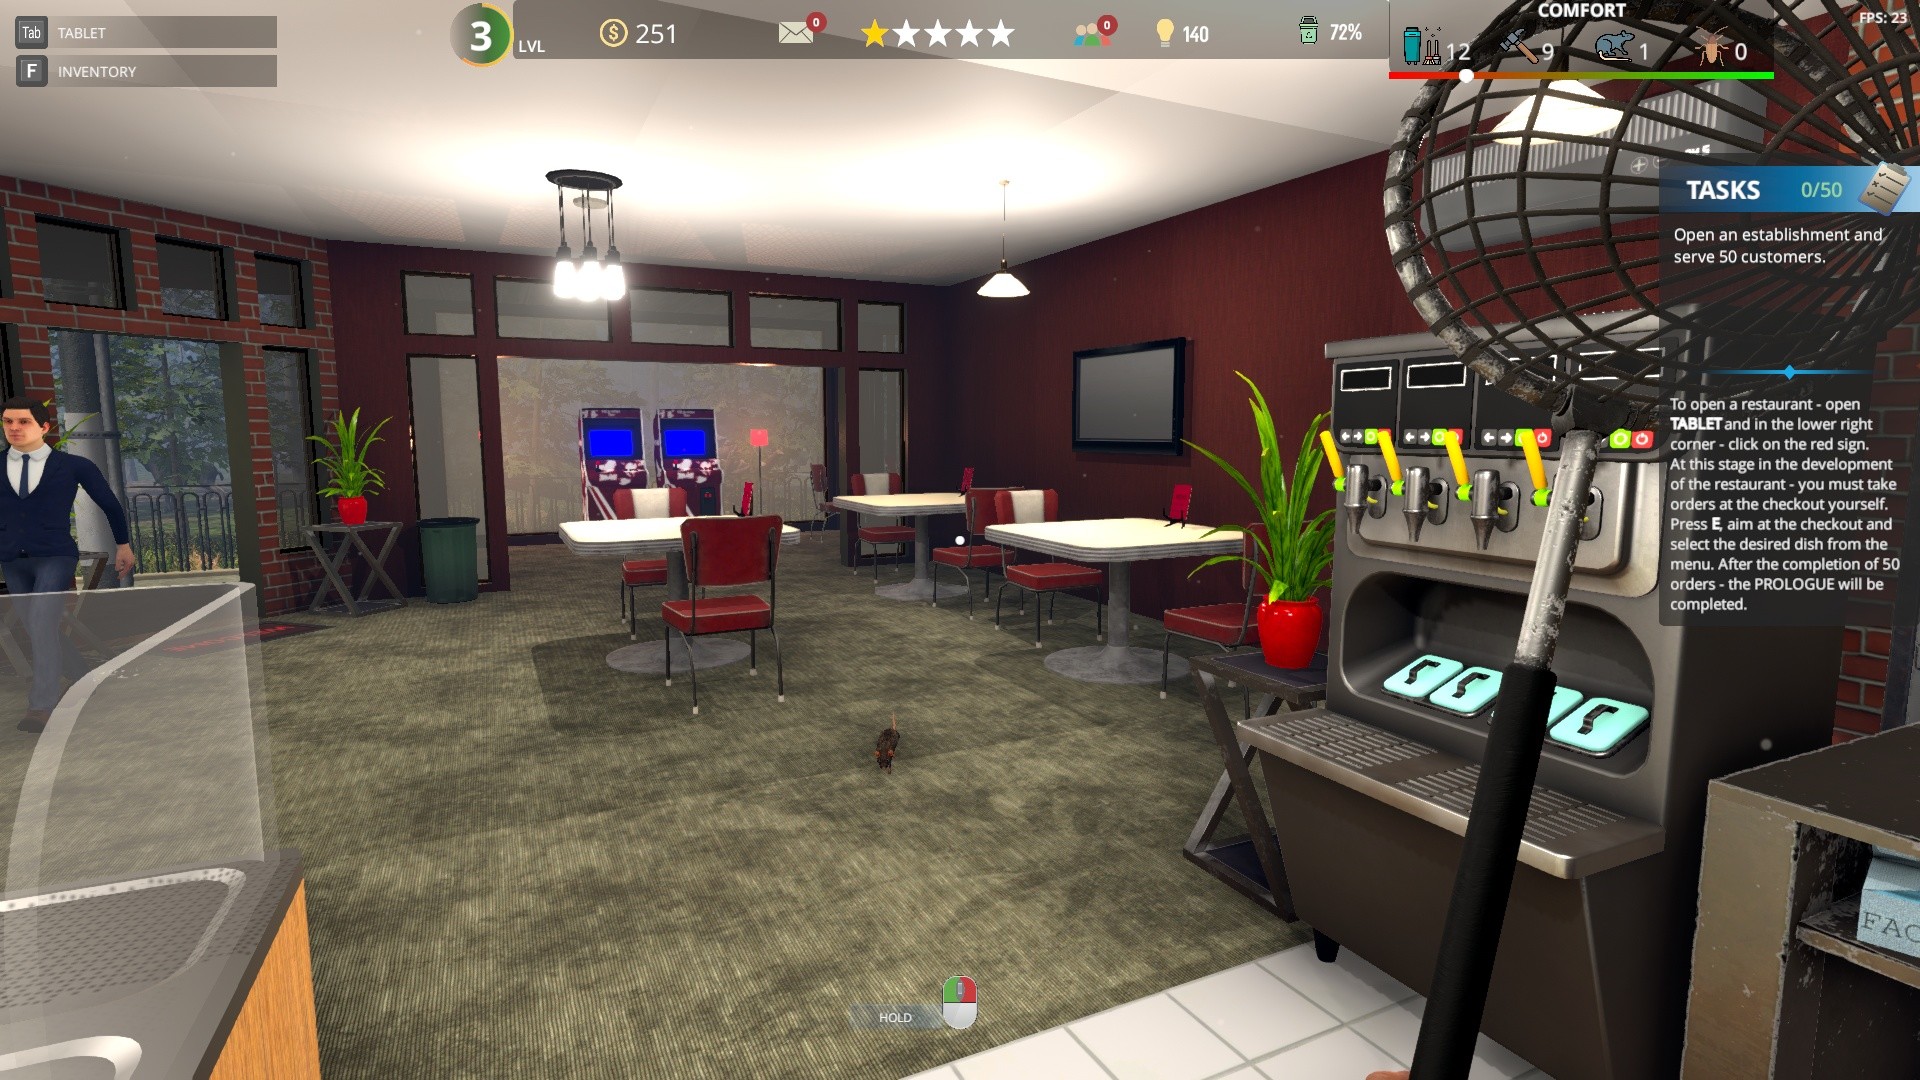 Cafe Owner Simulator on Steam